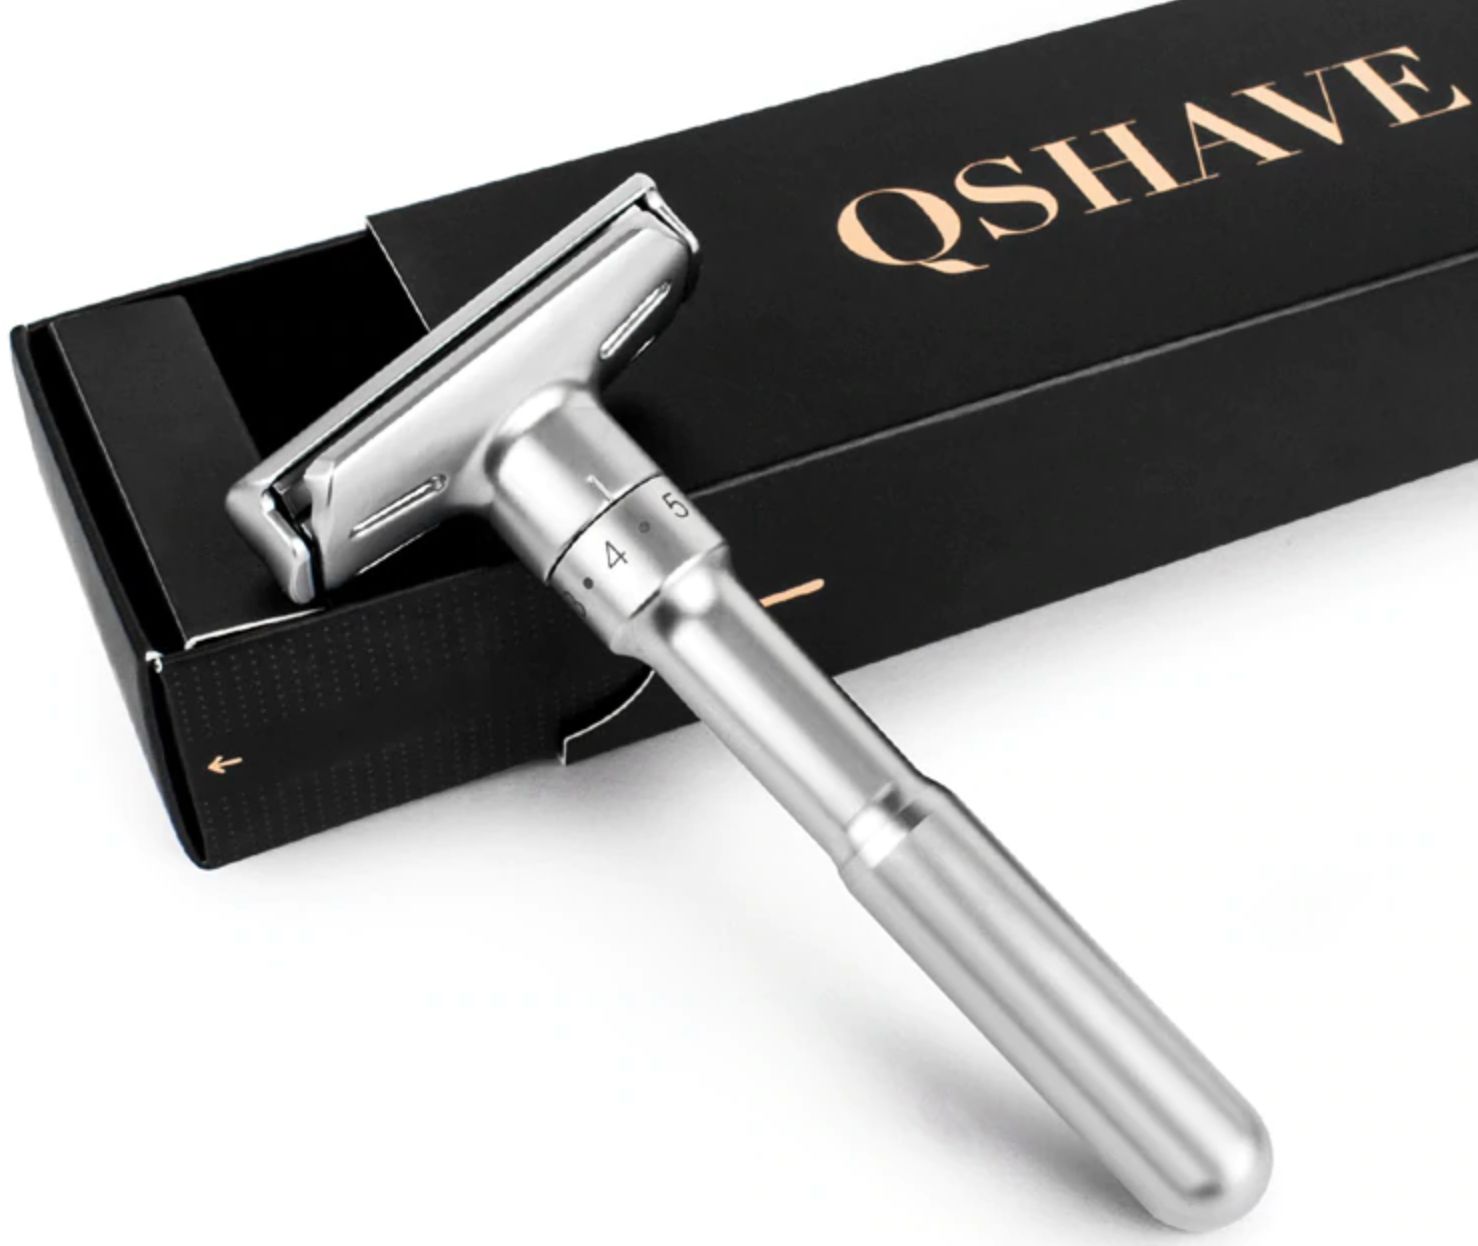 Qshave Adjustable Safety Razor With 5 Pcs Blades Urbane Man